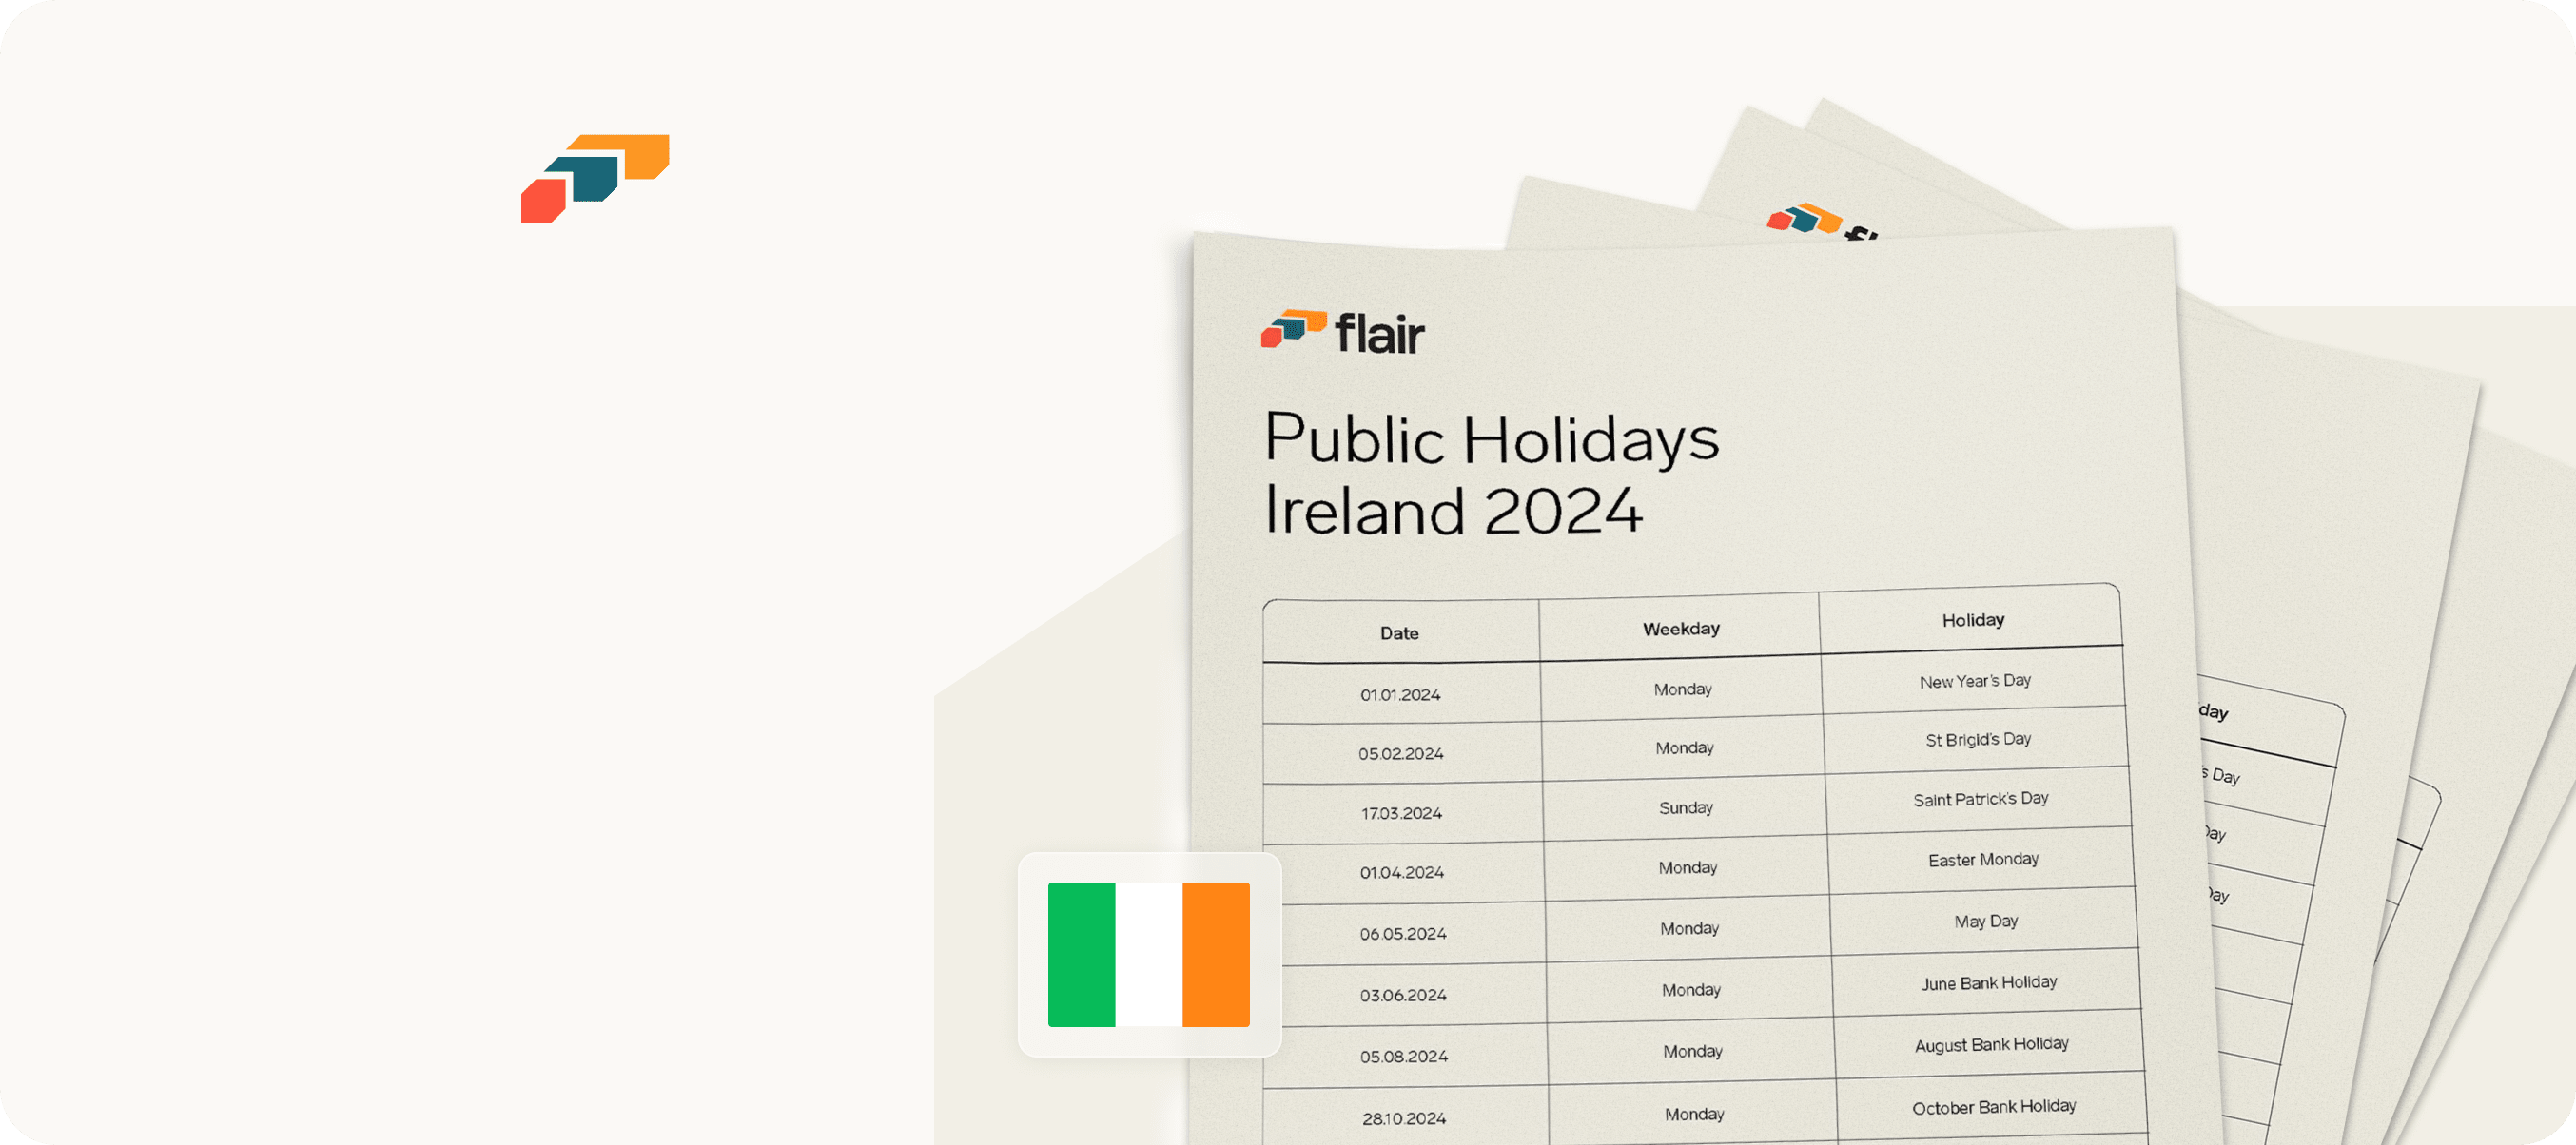 Public Holidays in Ireland 2024 flair